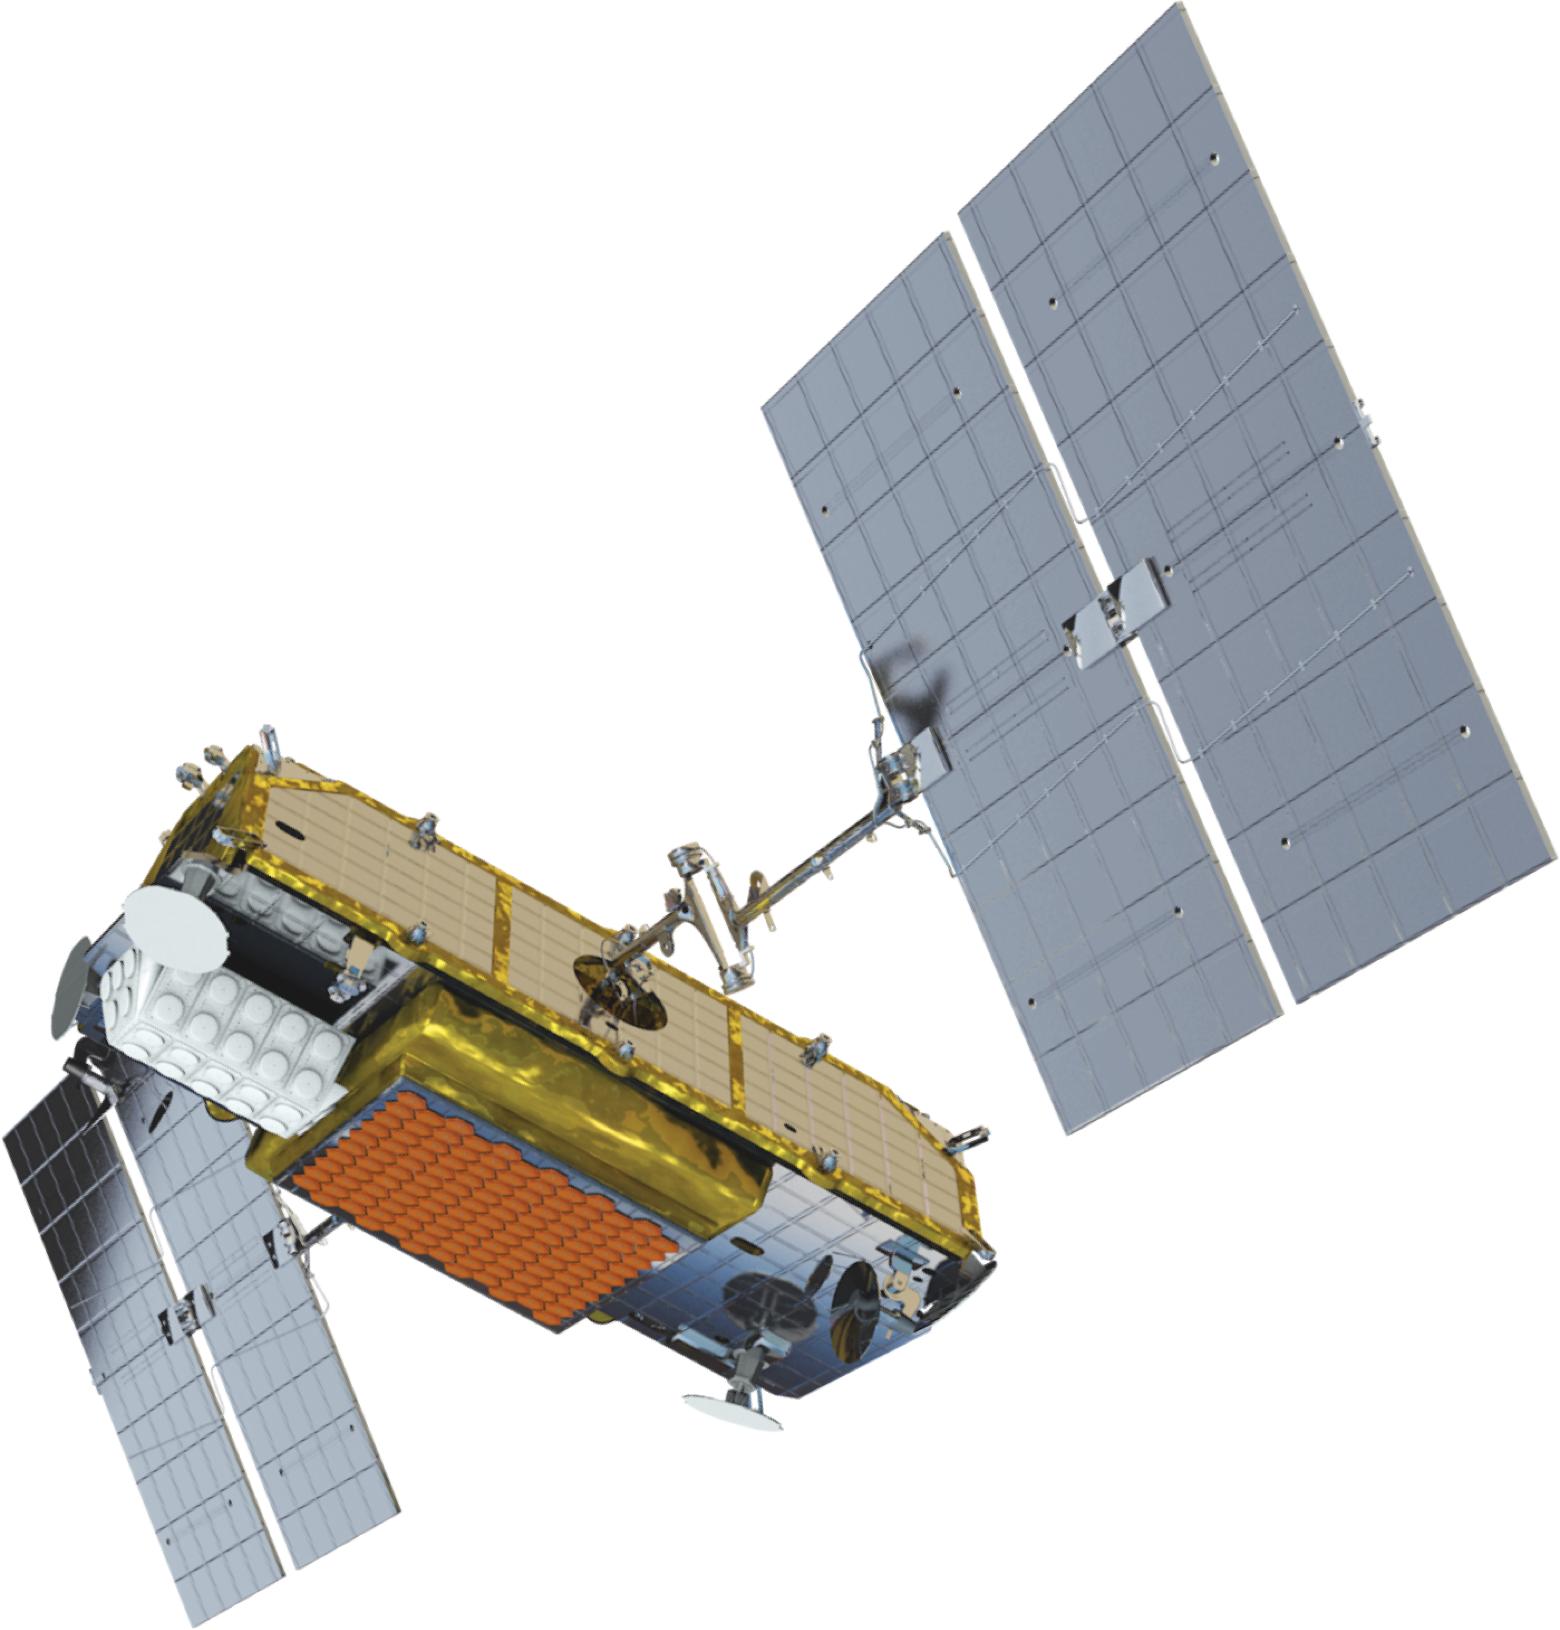 Orbiting Satellite Rendering PNG image